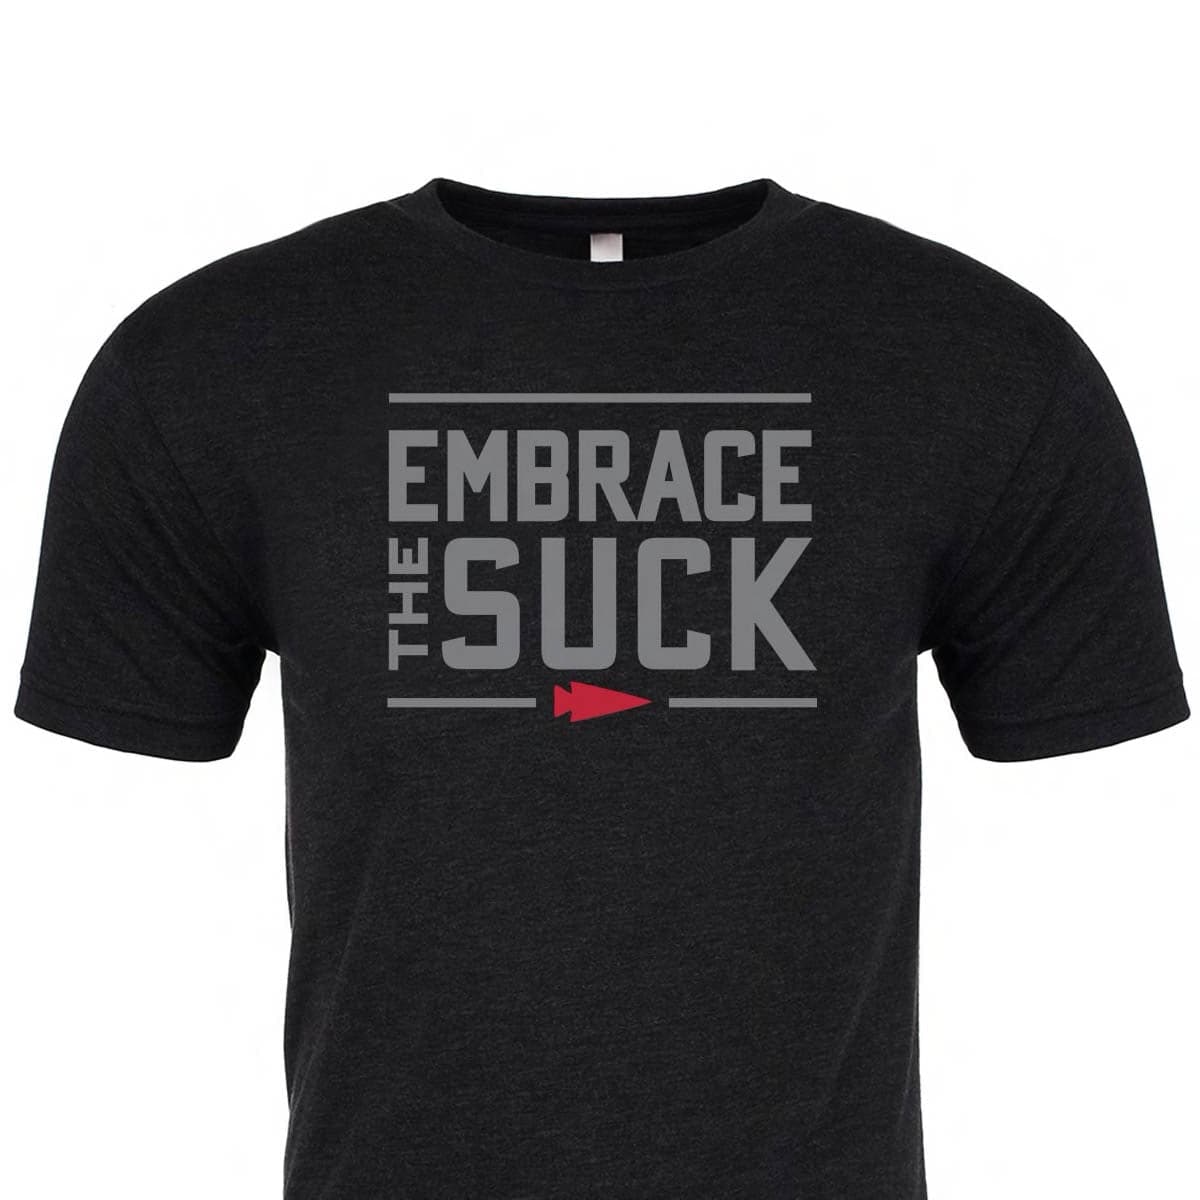 T-shirt - Embrace the Suck